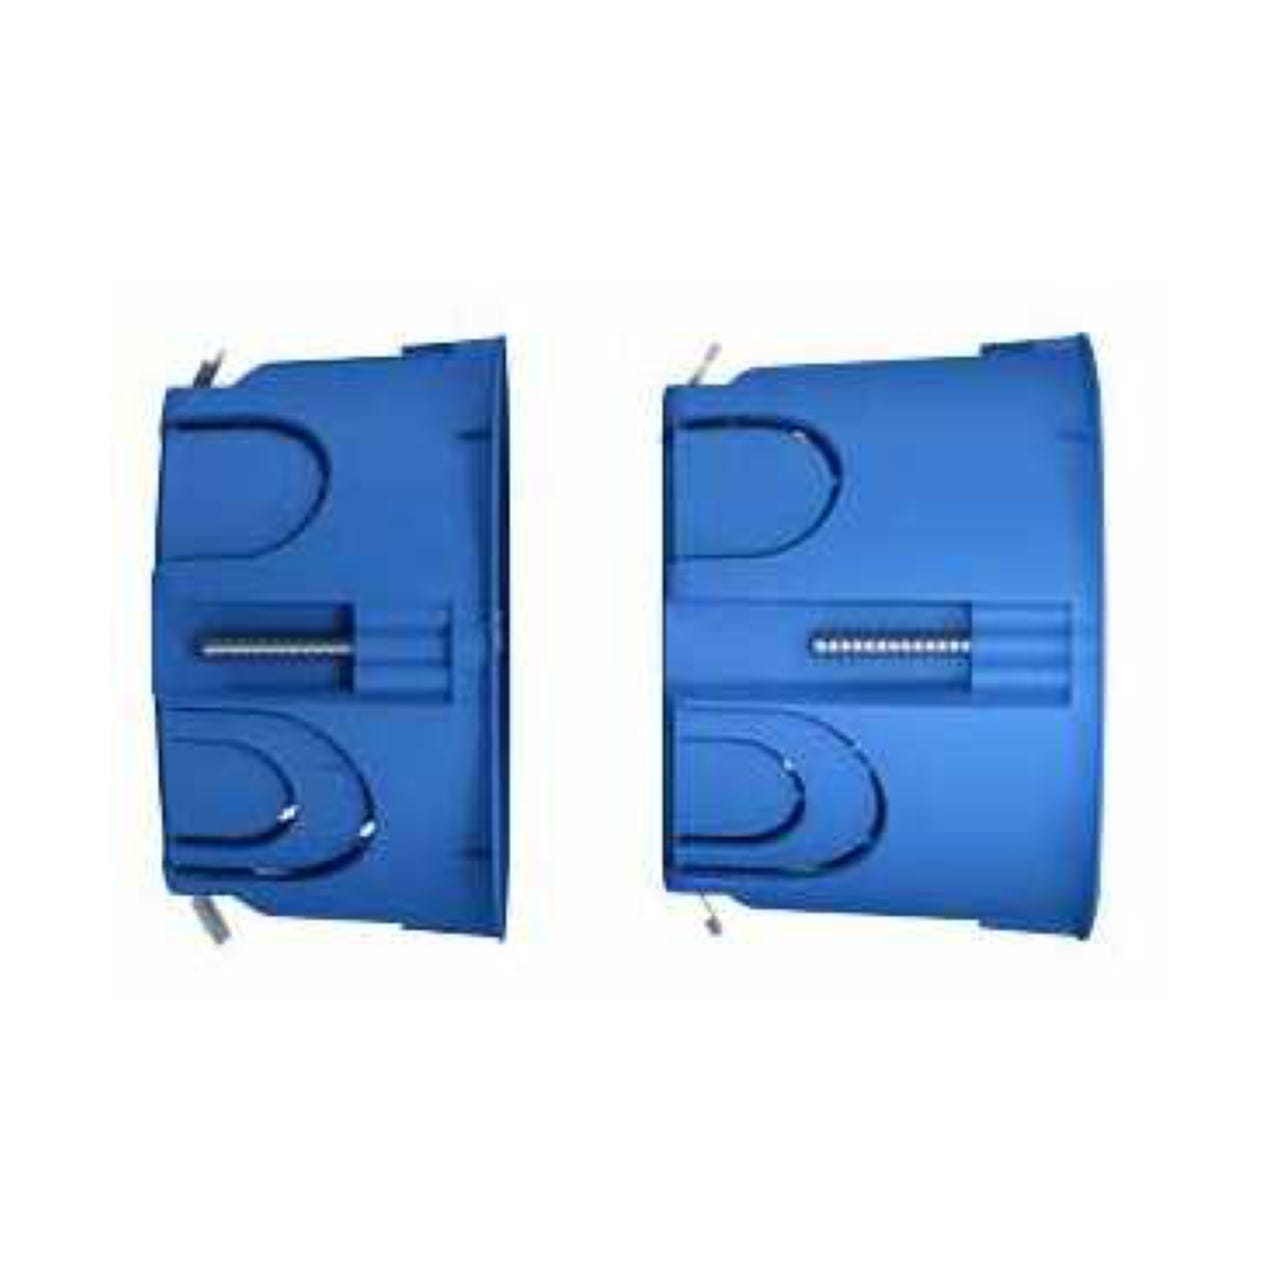 boite cloison sèche - schneider multifix - 1 poste - profondeur 50 mm - diamètre 67 mm 0